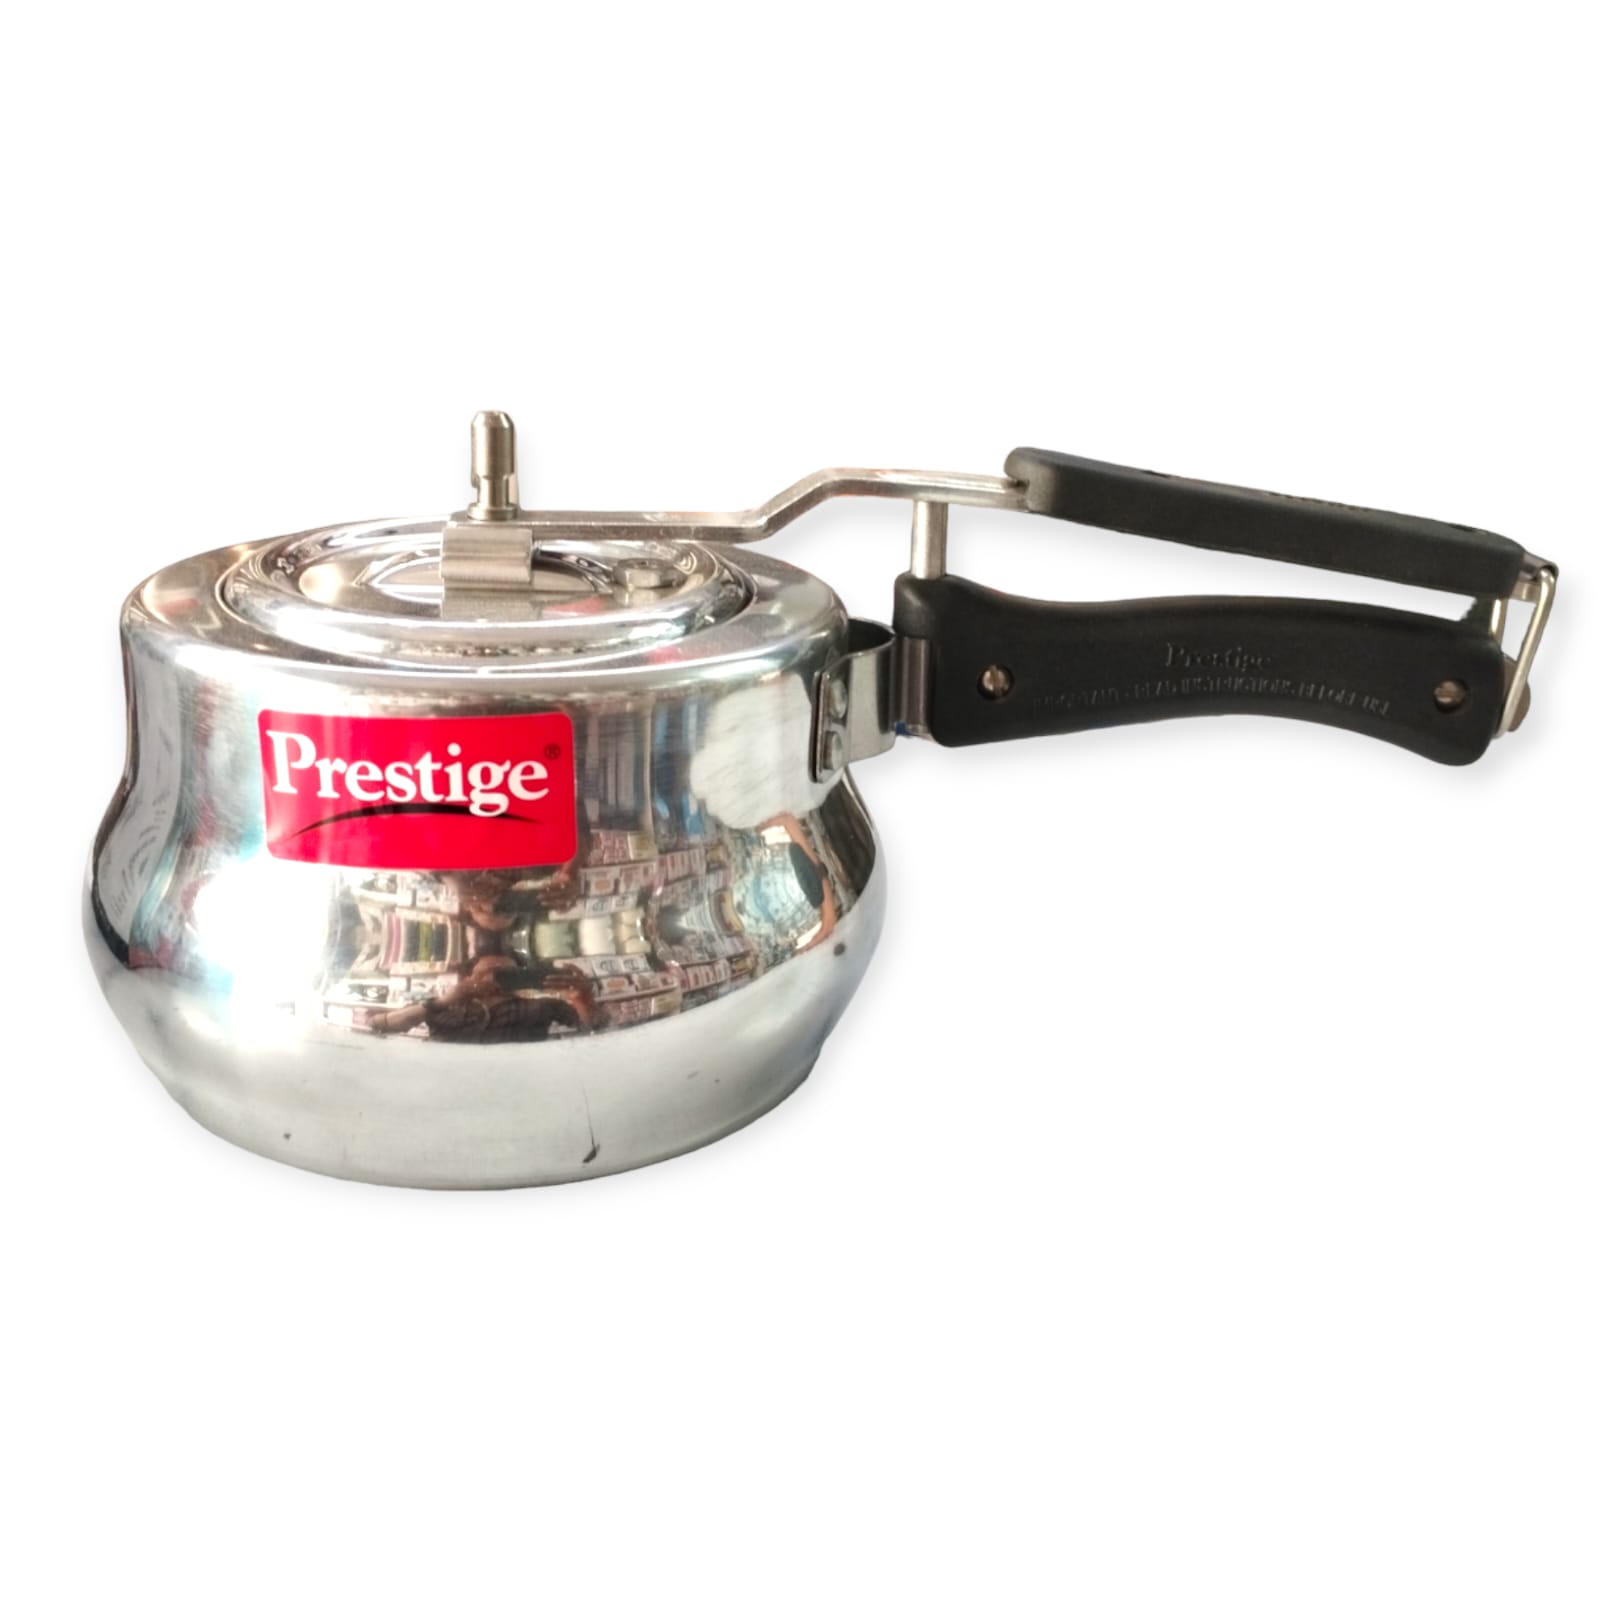 Prestige cooker 